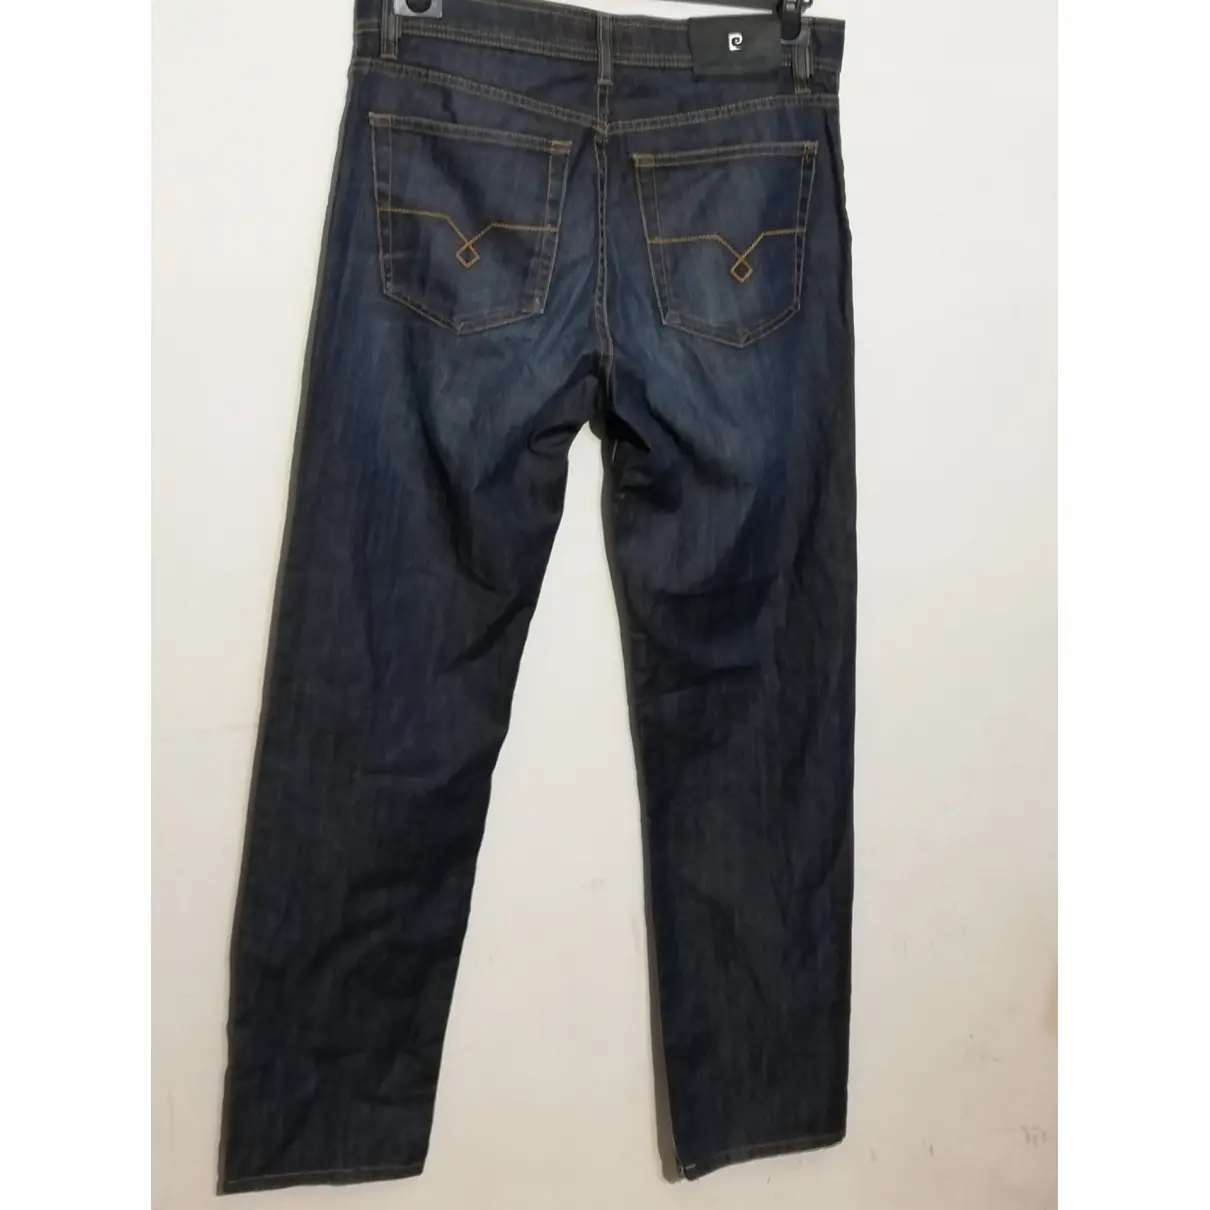 Buy Pierre Cardin Straight jeans online - Vintage